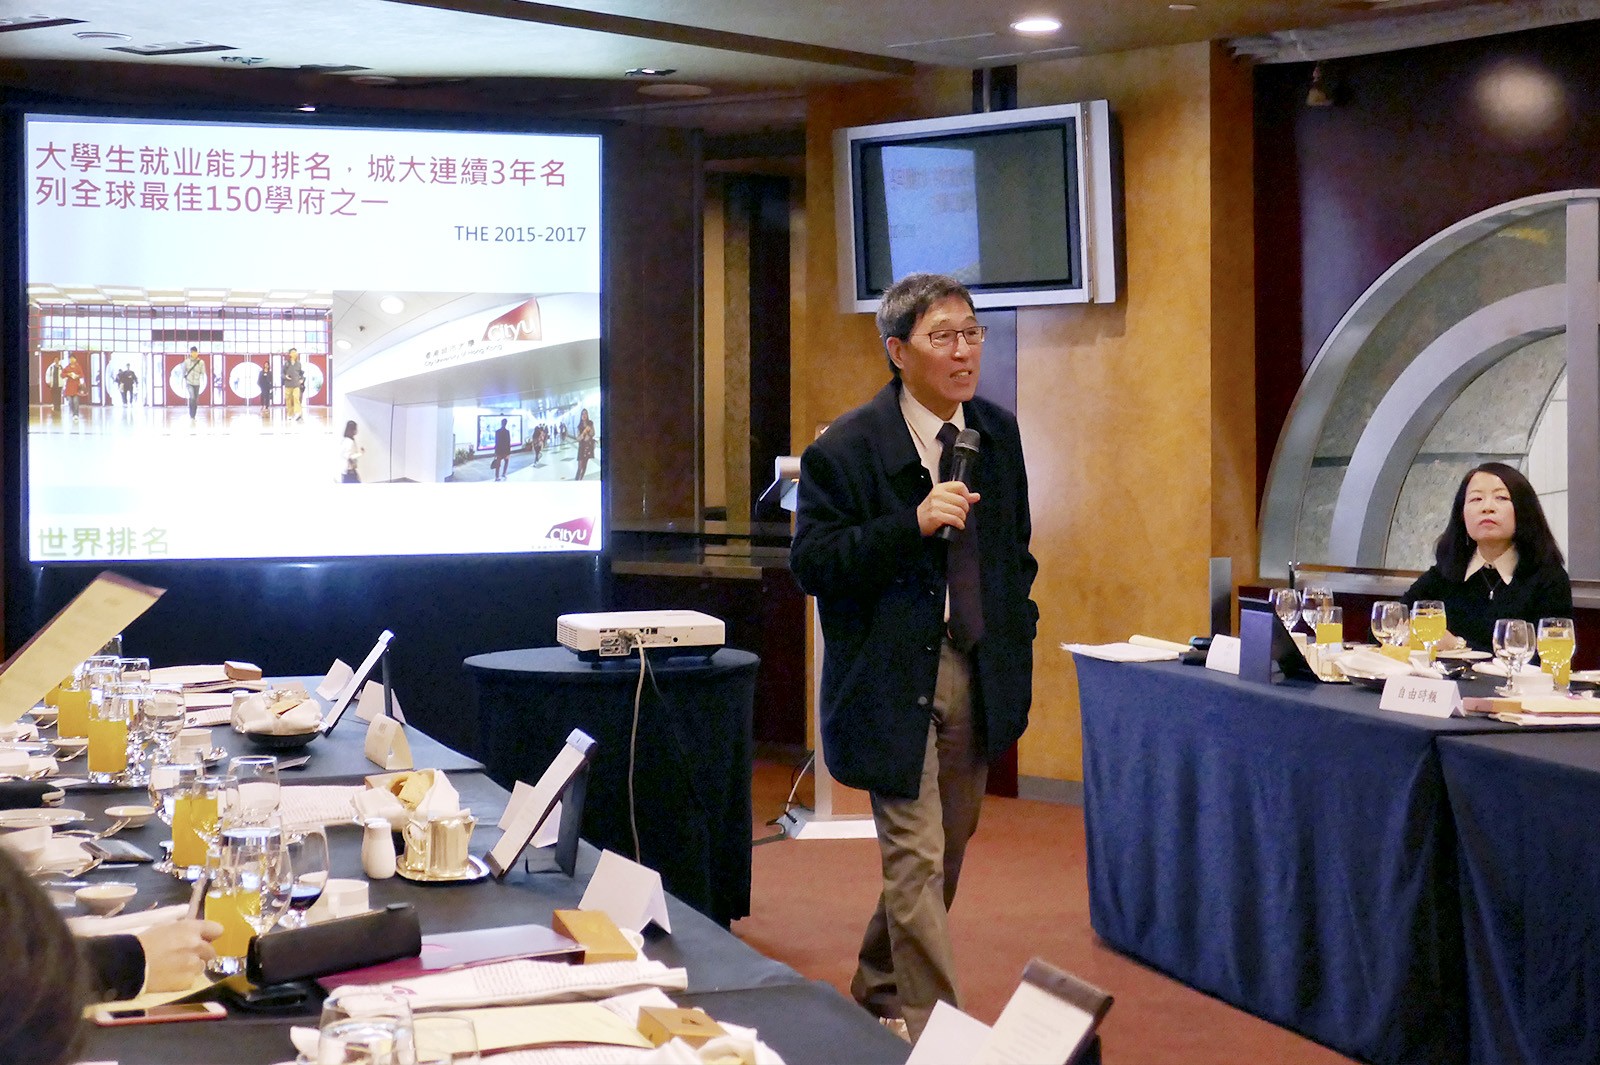 Professor Kuo introduces CityU’s latest development to media representatives in Taiwan.